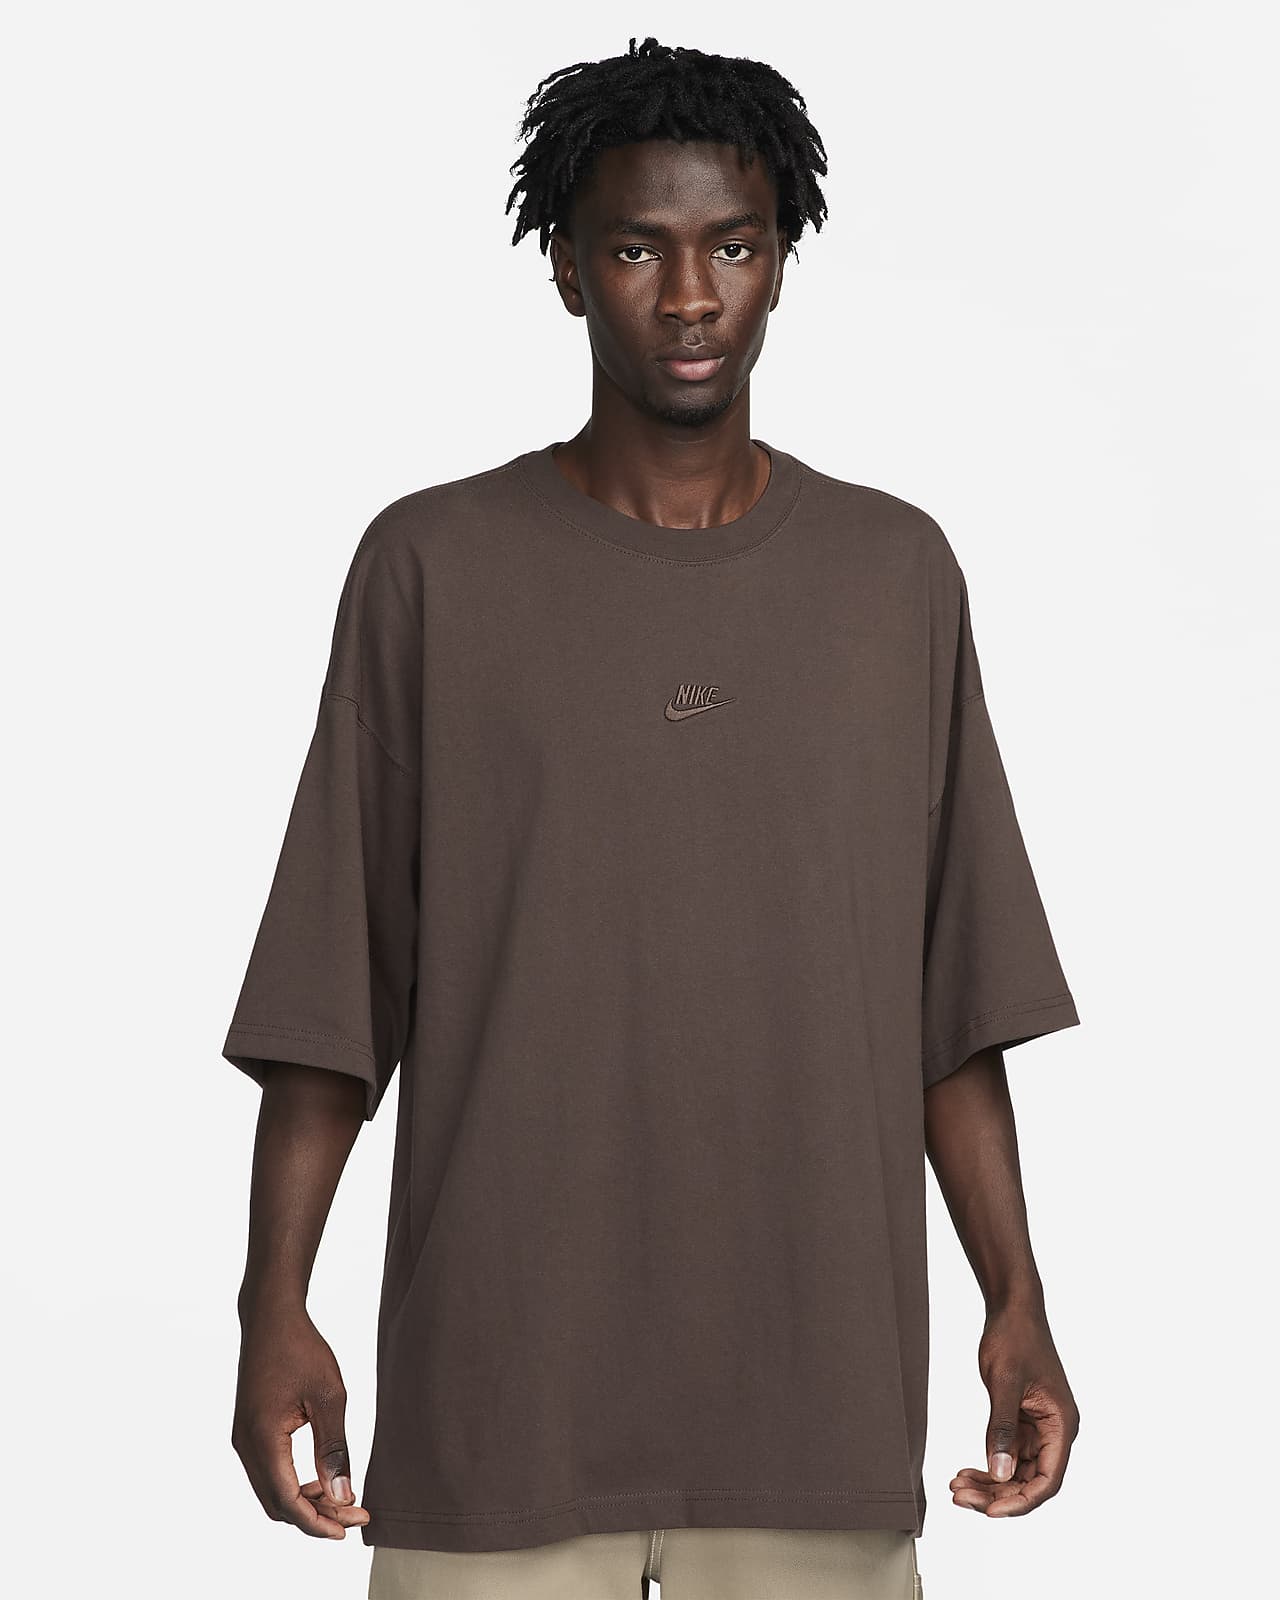 Nike Men's Sportswear Premium Essentials Oversized T-Shirt -Brown, Size: Large, Cotton